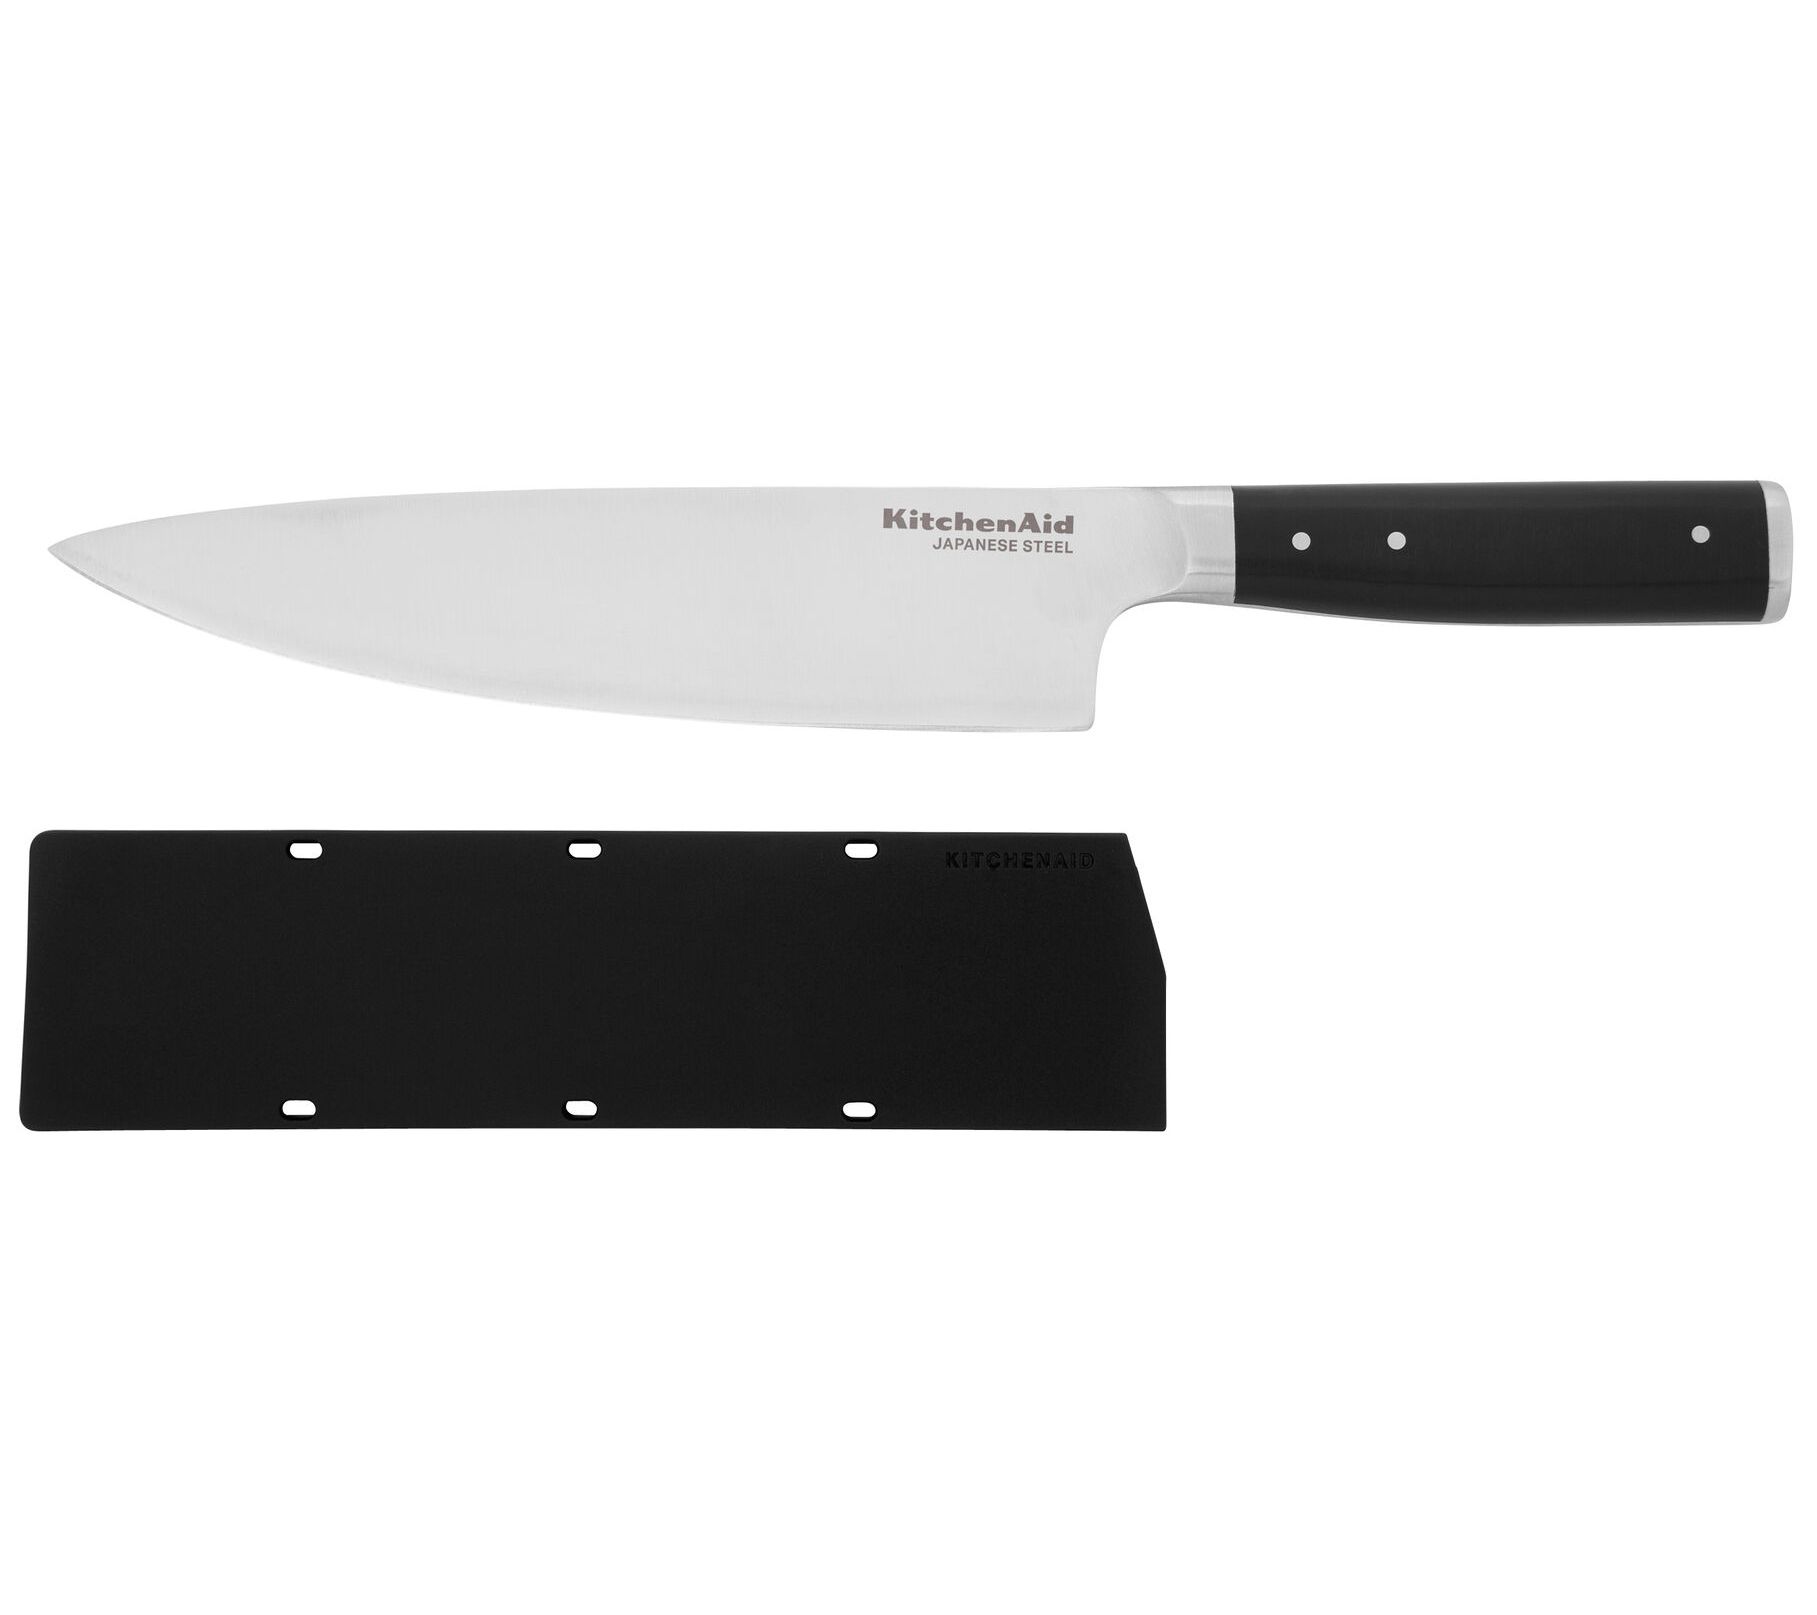 Elite Gourmet Cordless Electric Knife - Black